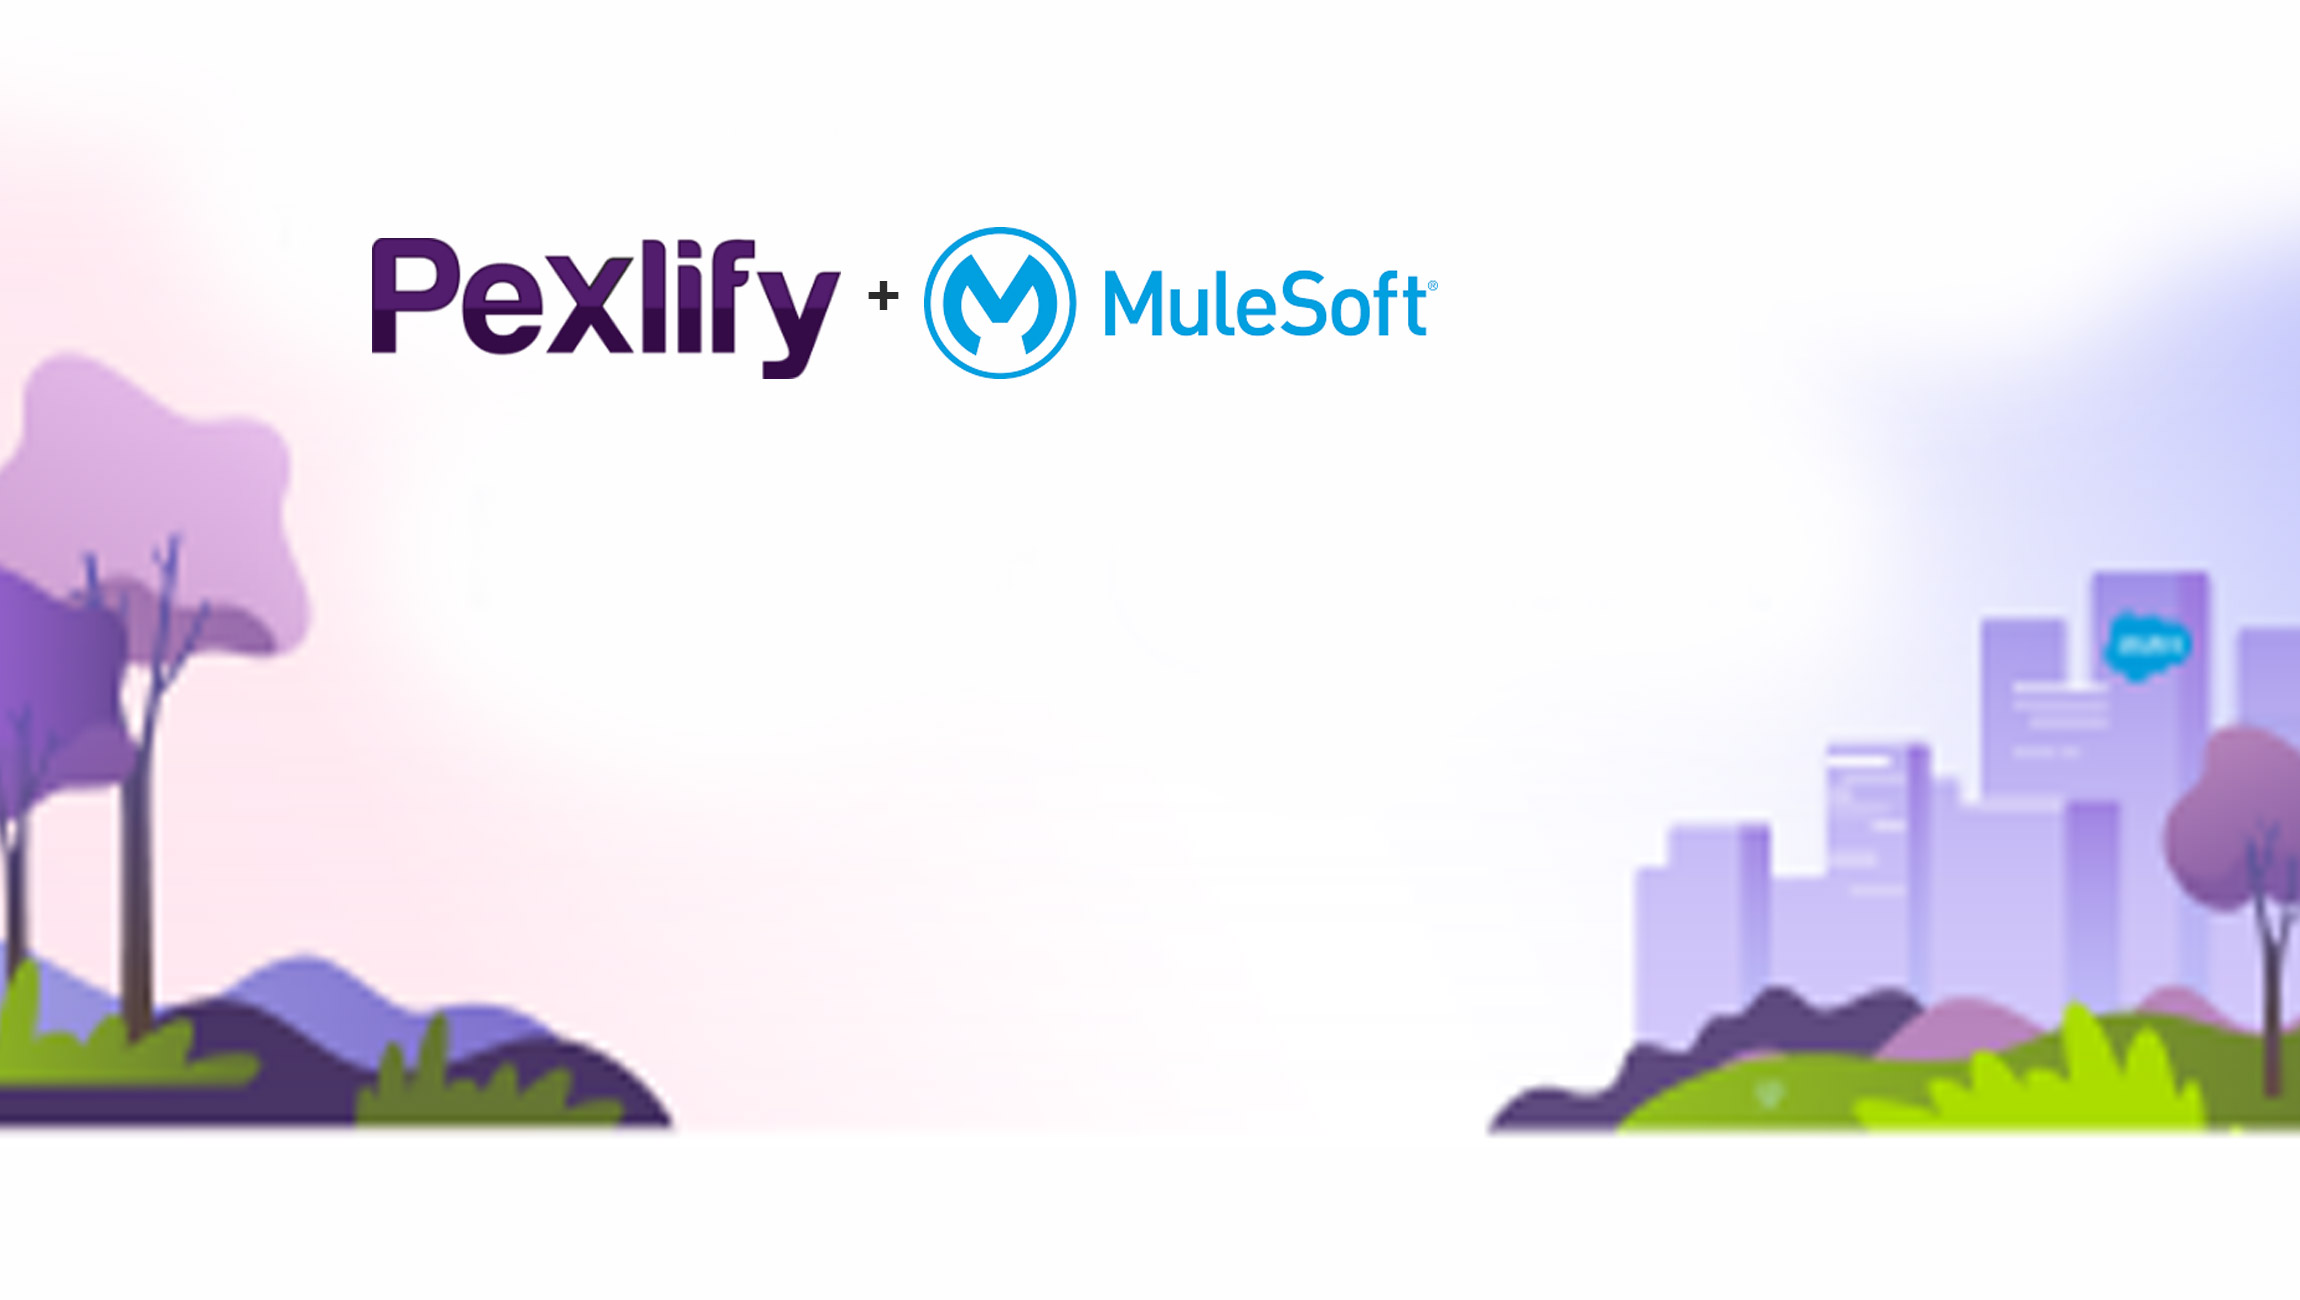 Pexlify Enterprise Solutions Joins the MuleSoft Partner Program